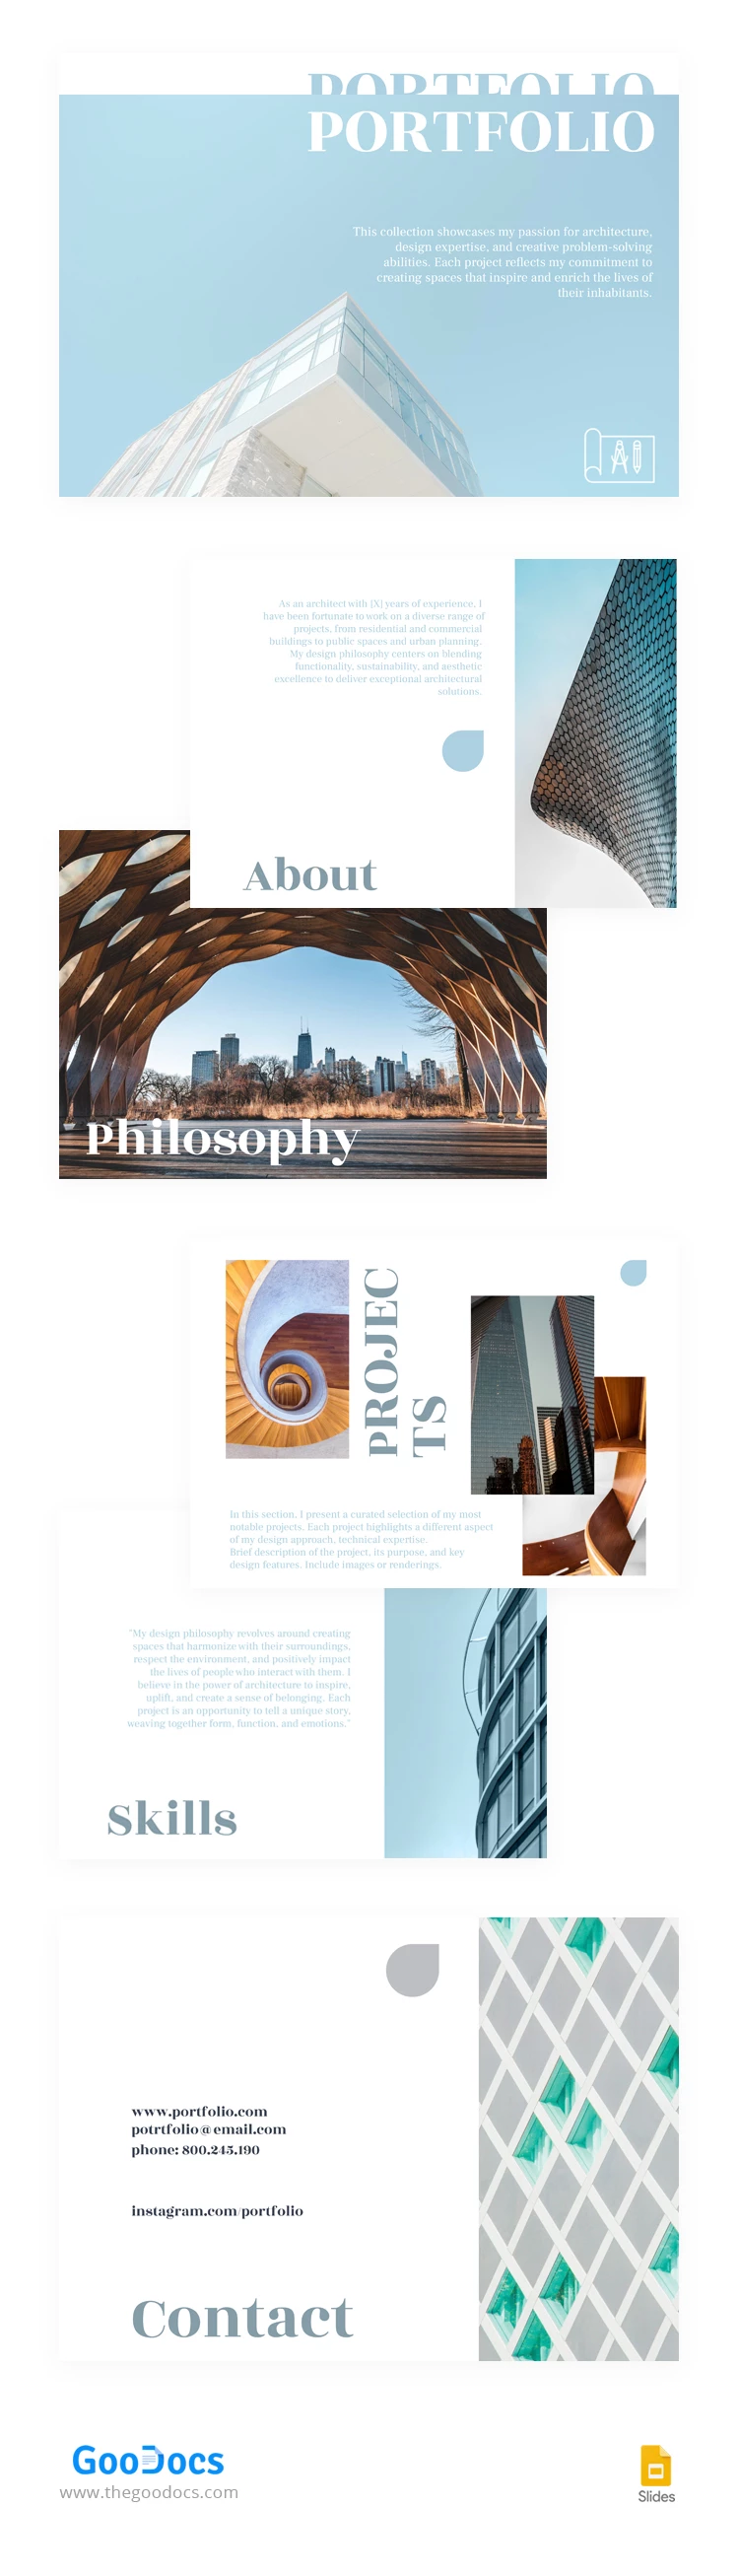 Architecture Portfolio - free Google Docs Template - 10066585